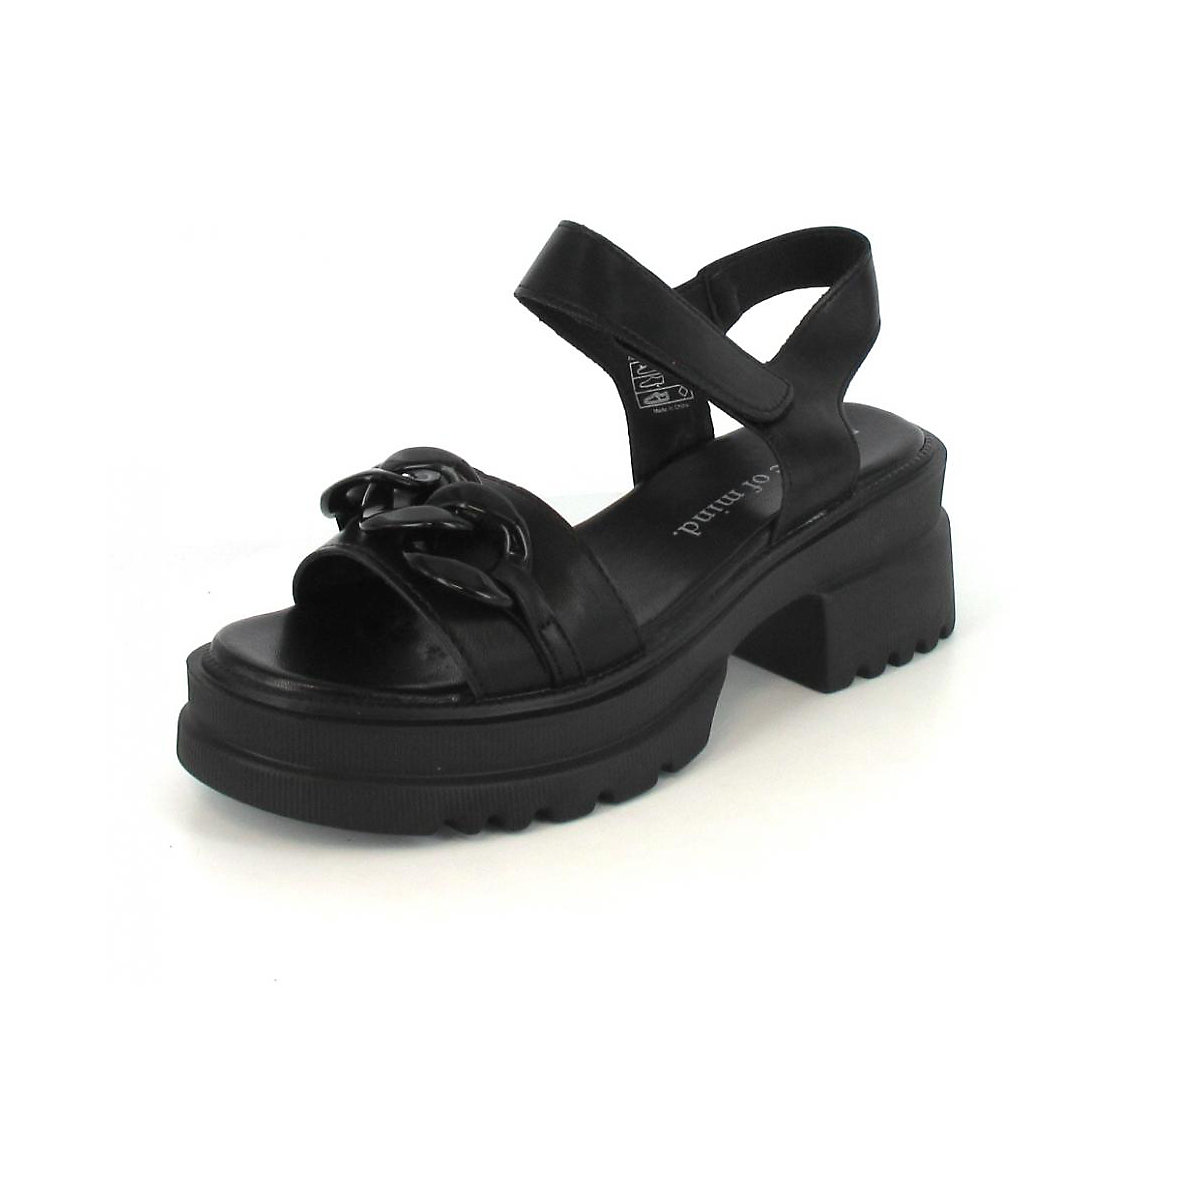 Jane Klain Sandale Komfort-Sandalen schwarz